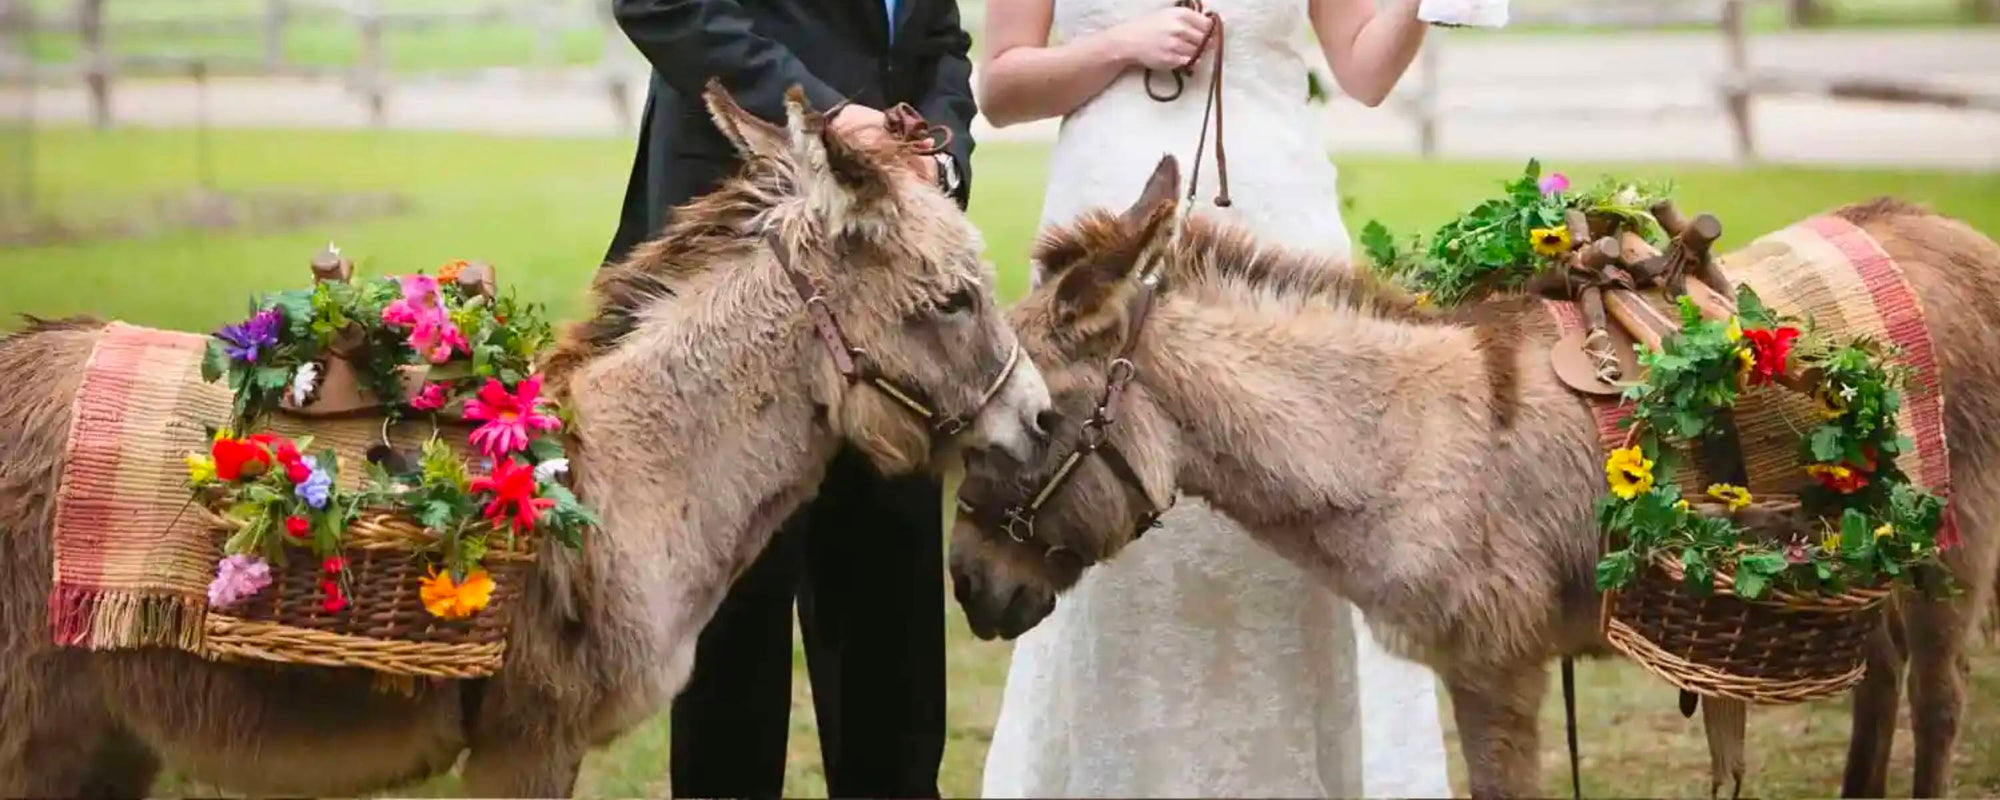 Wedding Donkeys and Other Unique Wedding Ideas